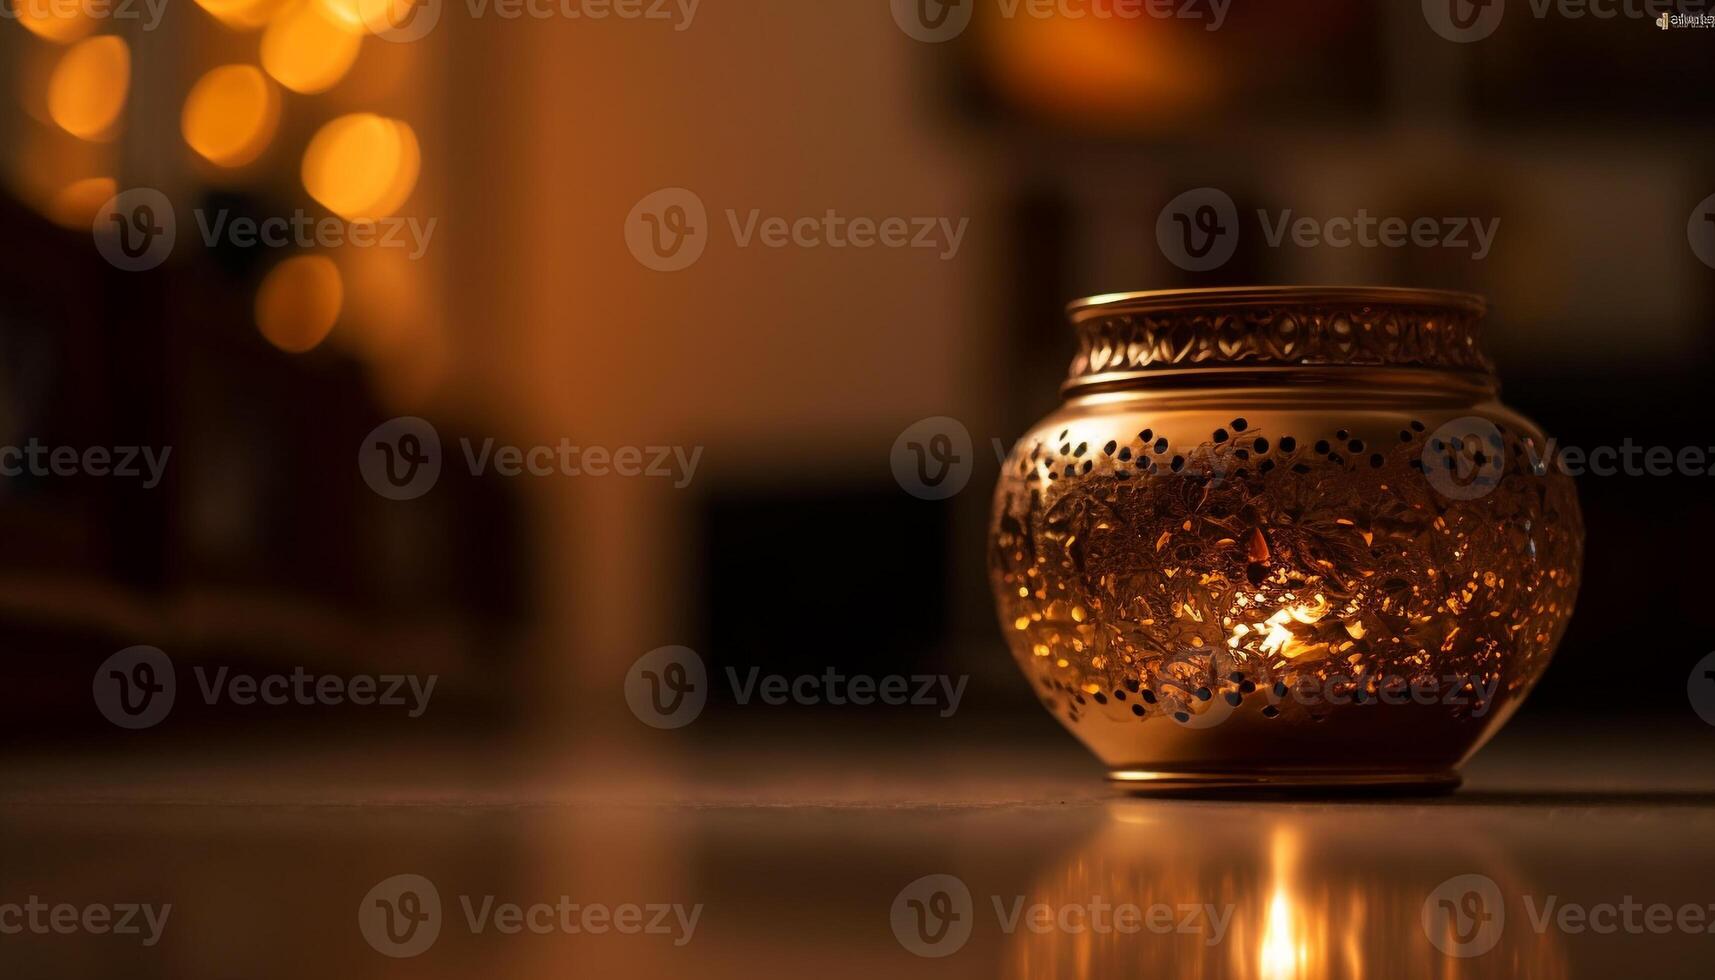 An old fashioned candle illuminates the elegant pottery vase indoors generated by AI photo